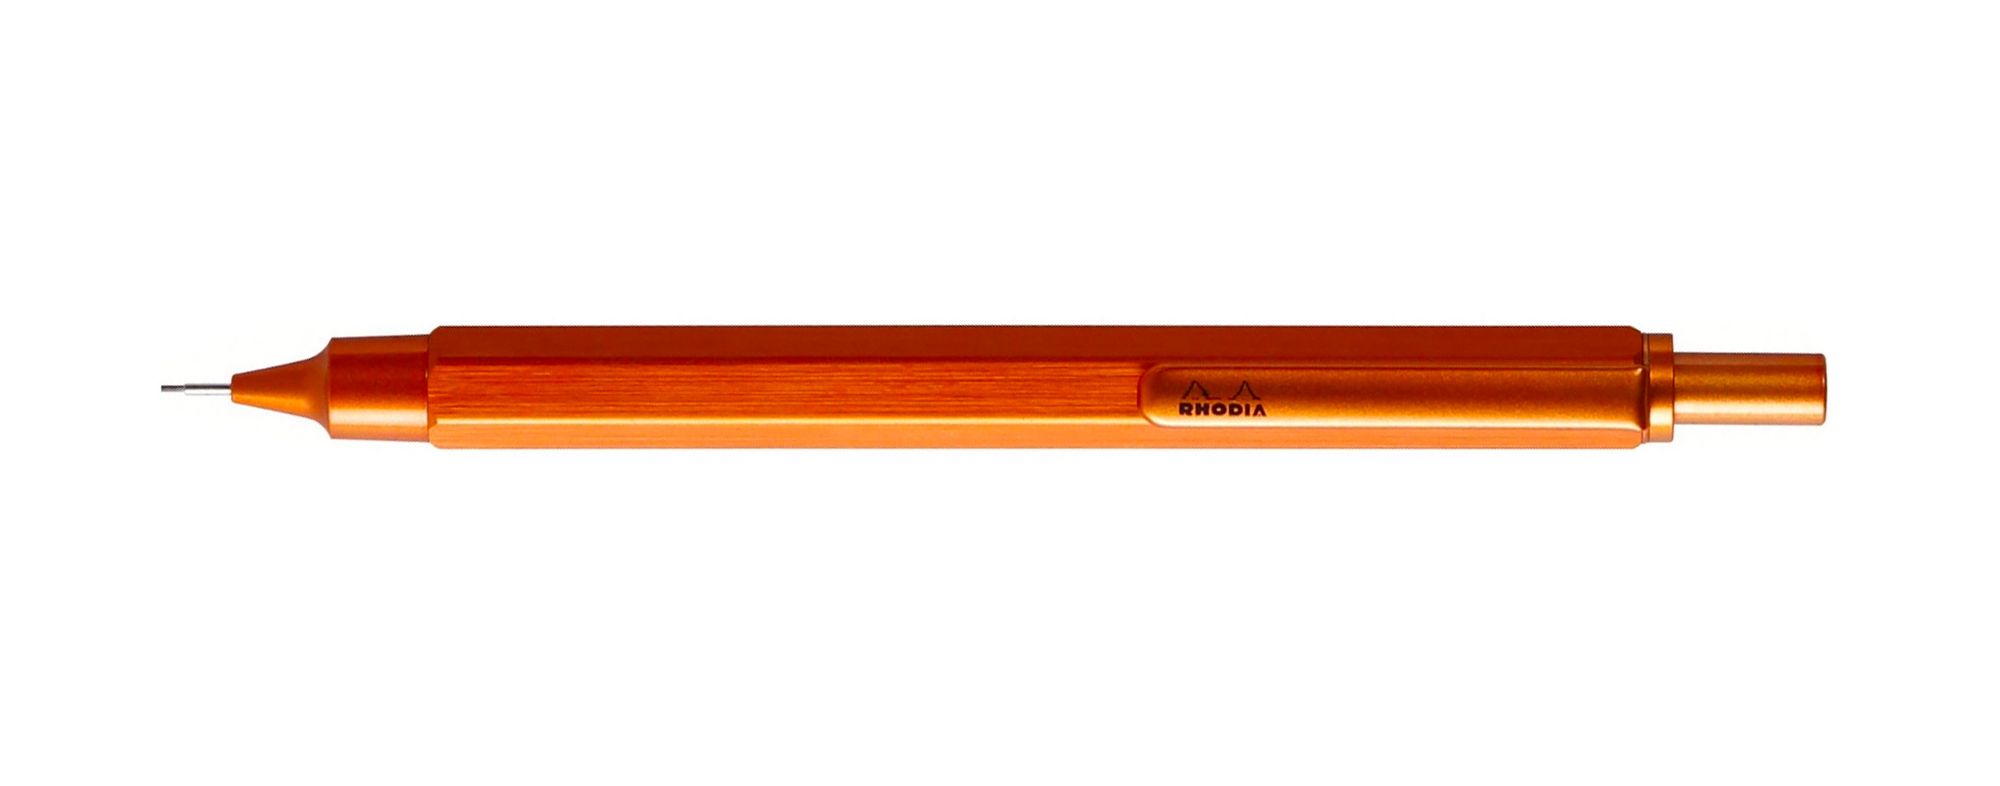 https://goldpen.eu/21826/rhodia-scritp-matita-meccanica-in-alluminio-arancione.jpg